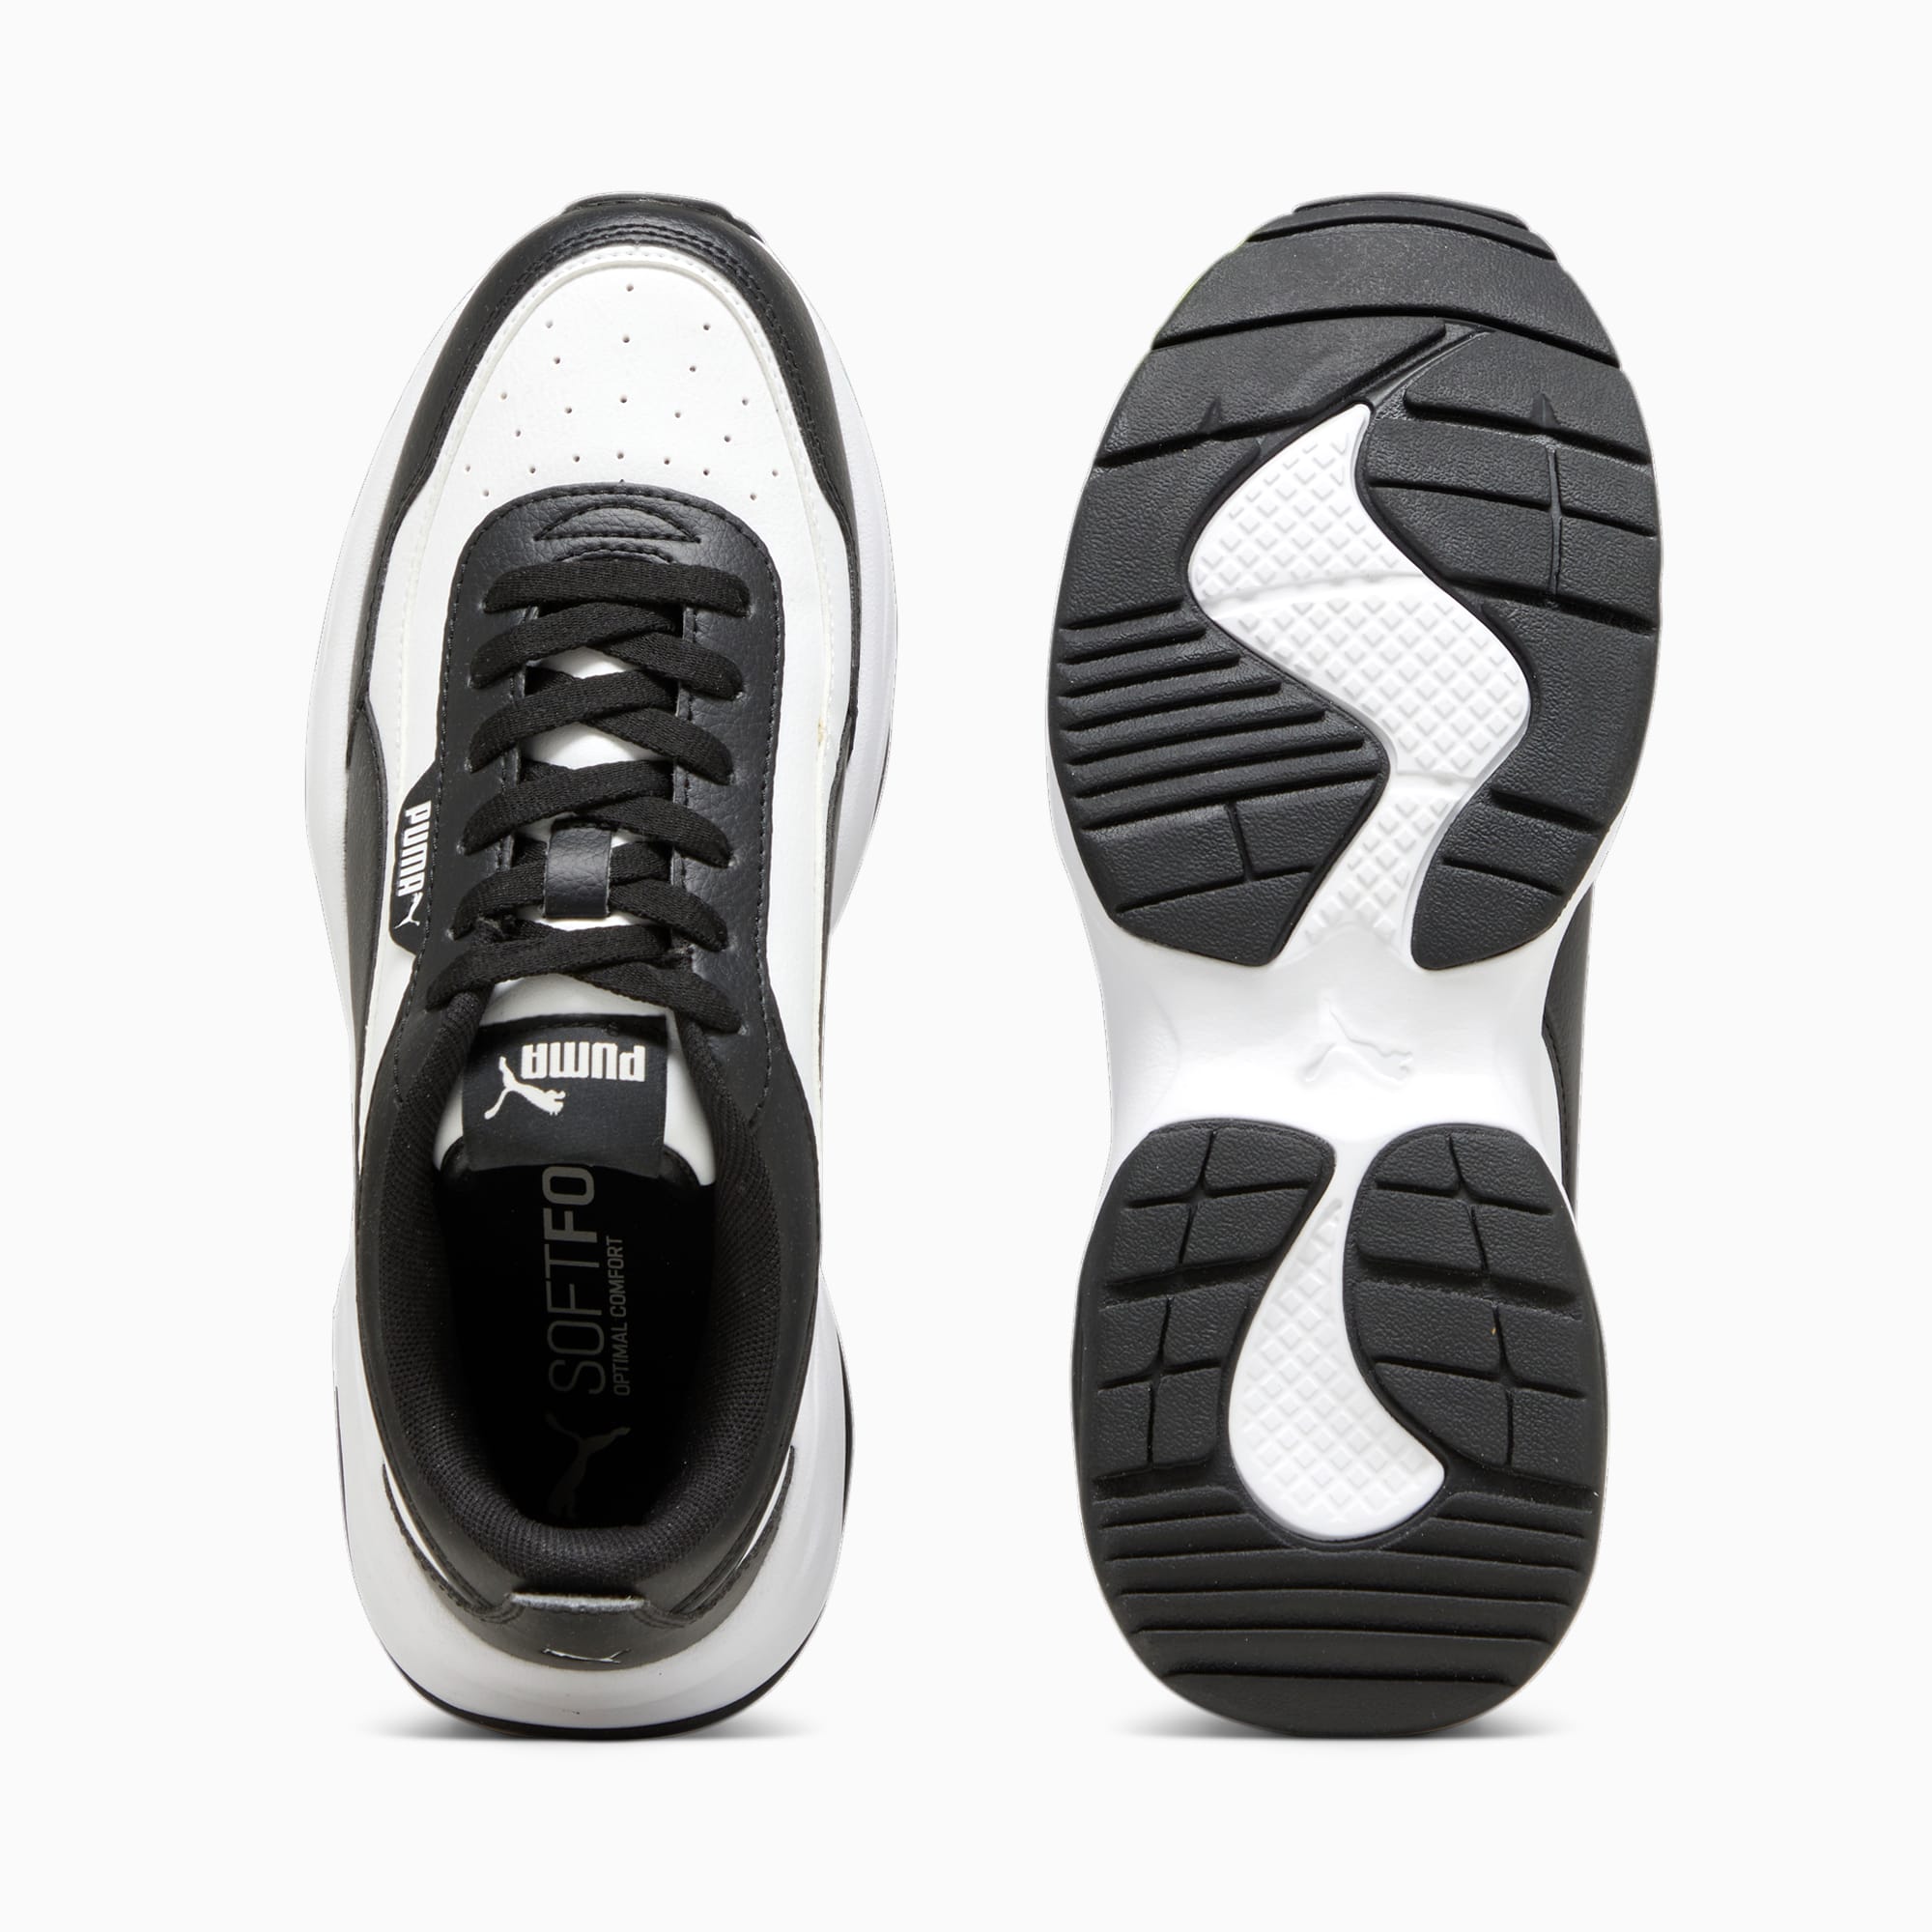 PUMA Cilia Mode Sneakers Damen Schuhe, Weiß/Schwarz, Größe: 37.5, Schuhe